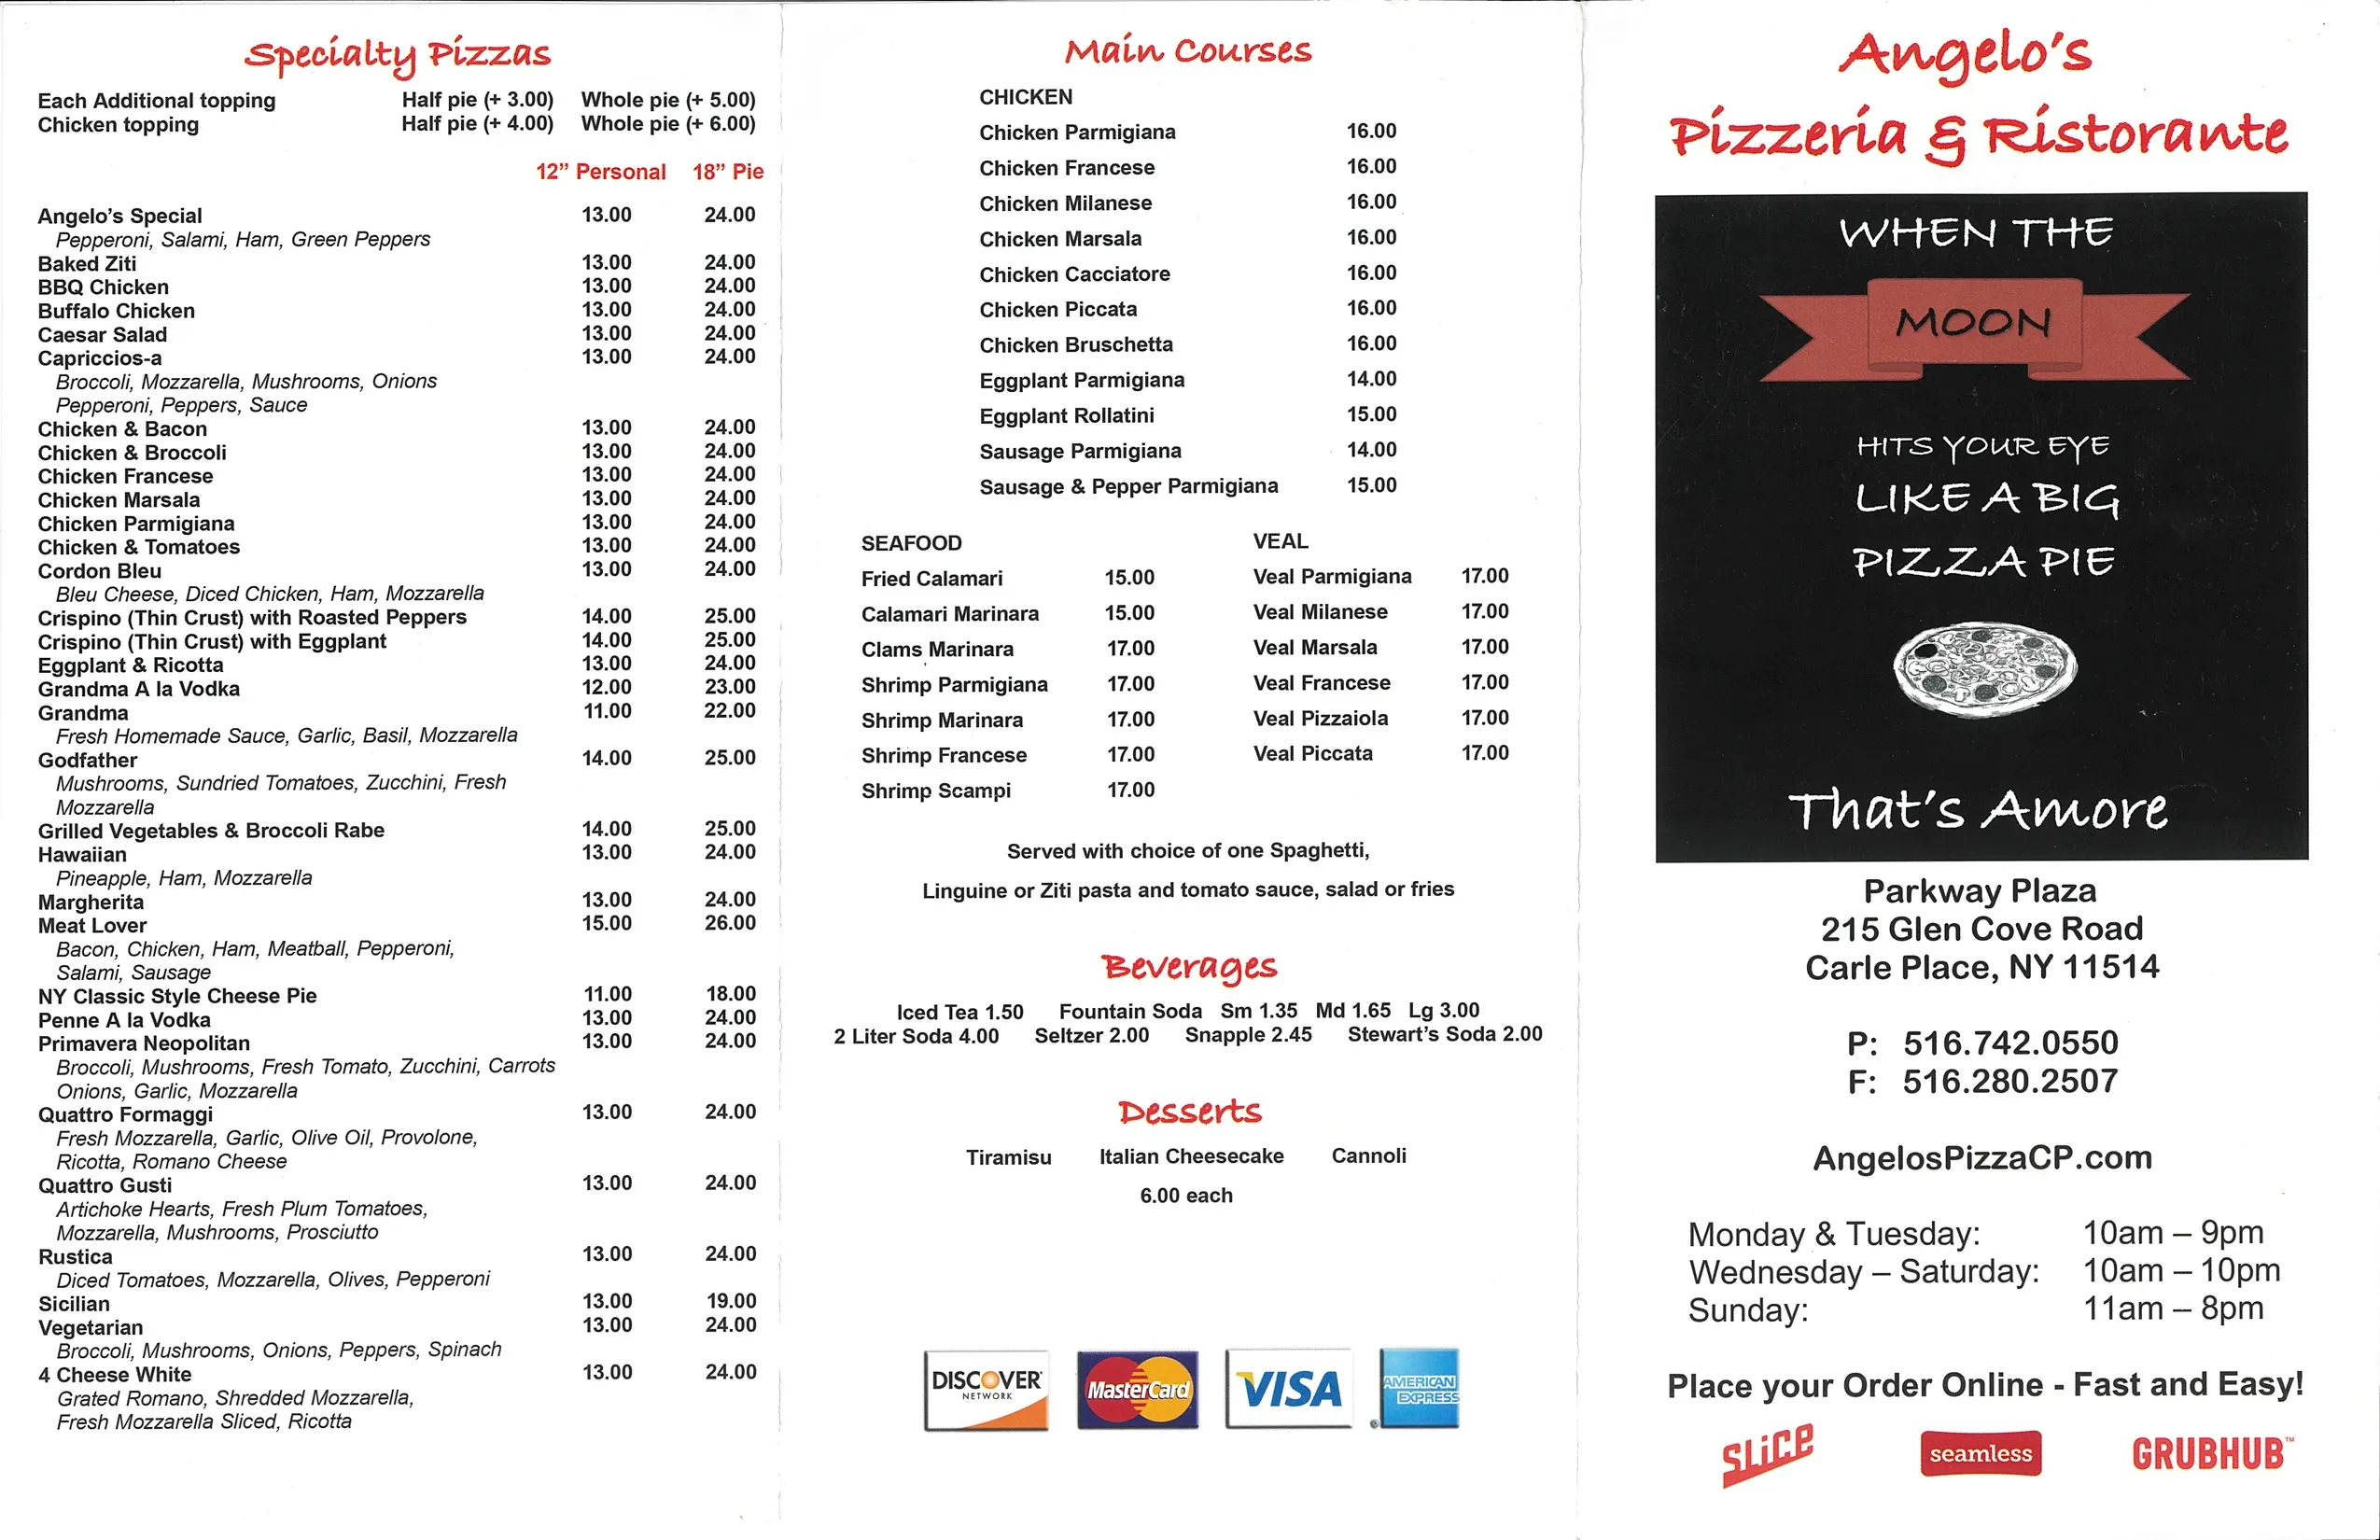 Angelo's Pizzeria & Ristorante Menu